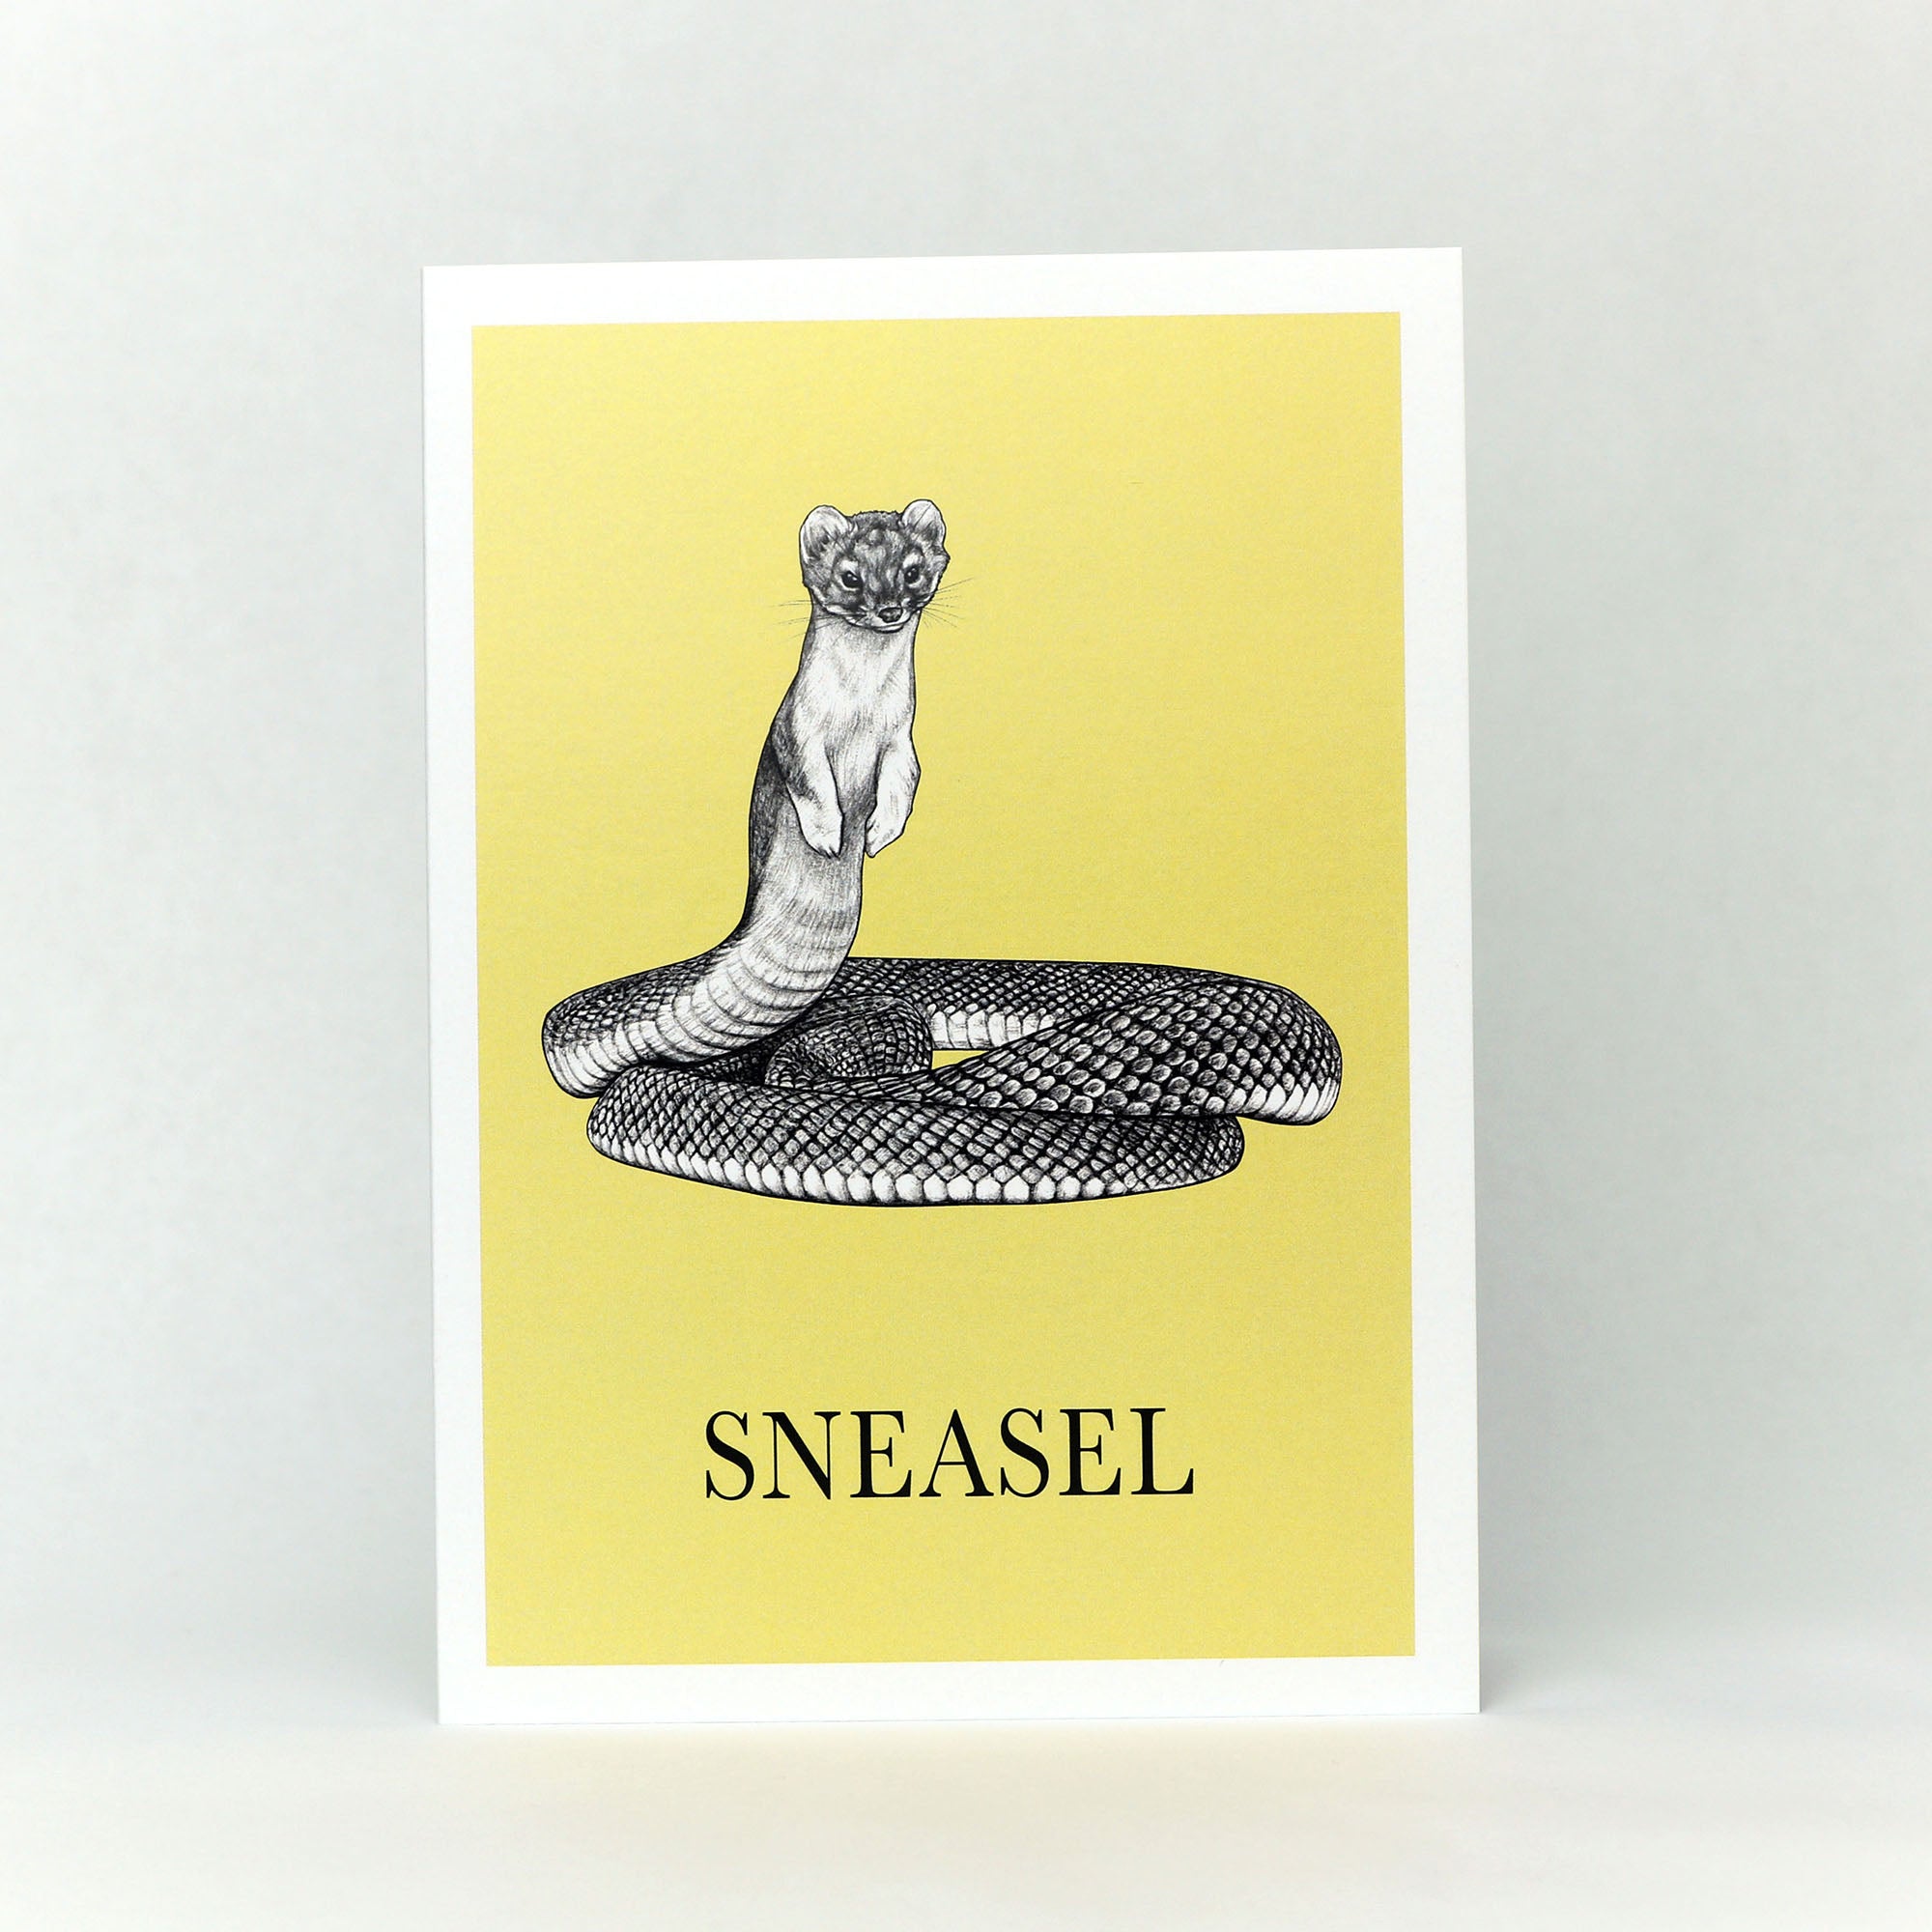 Sneasel | Snake + Weasel Hybrid Animal | 5x7" Greeting Card